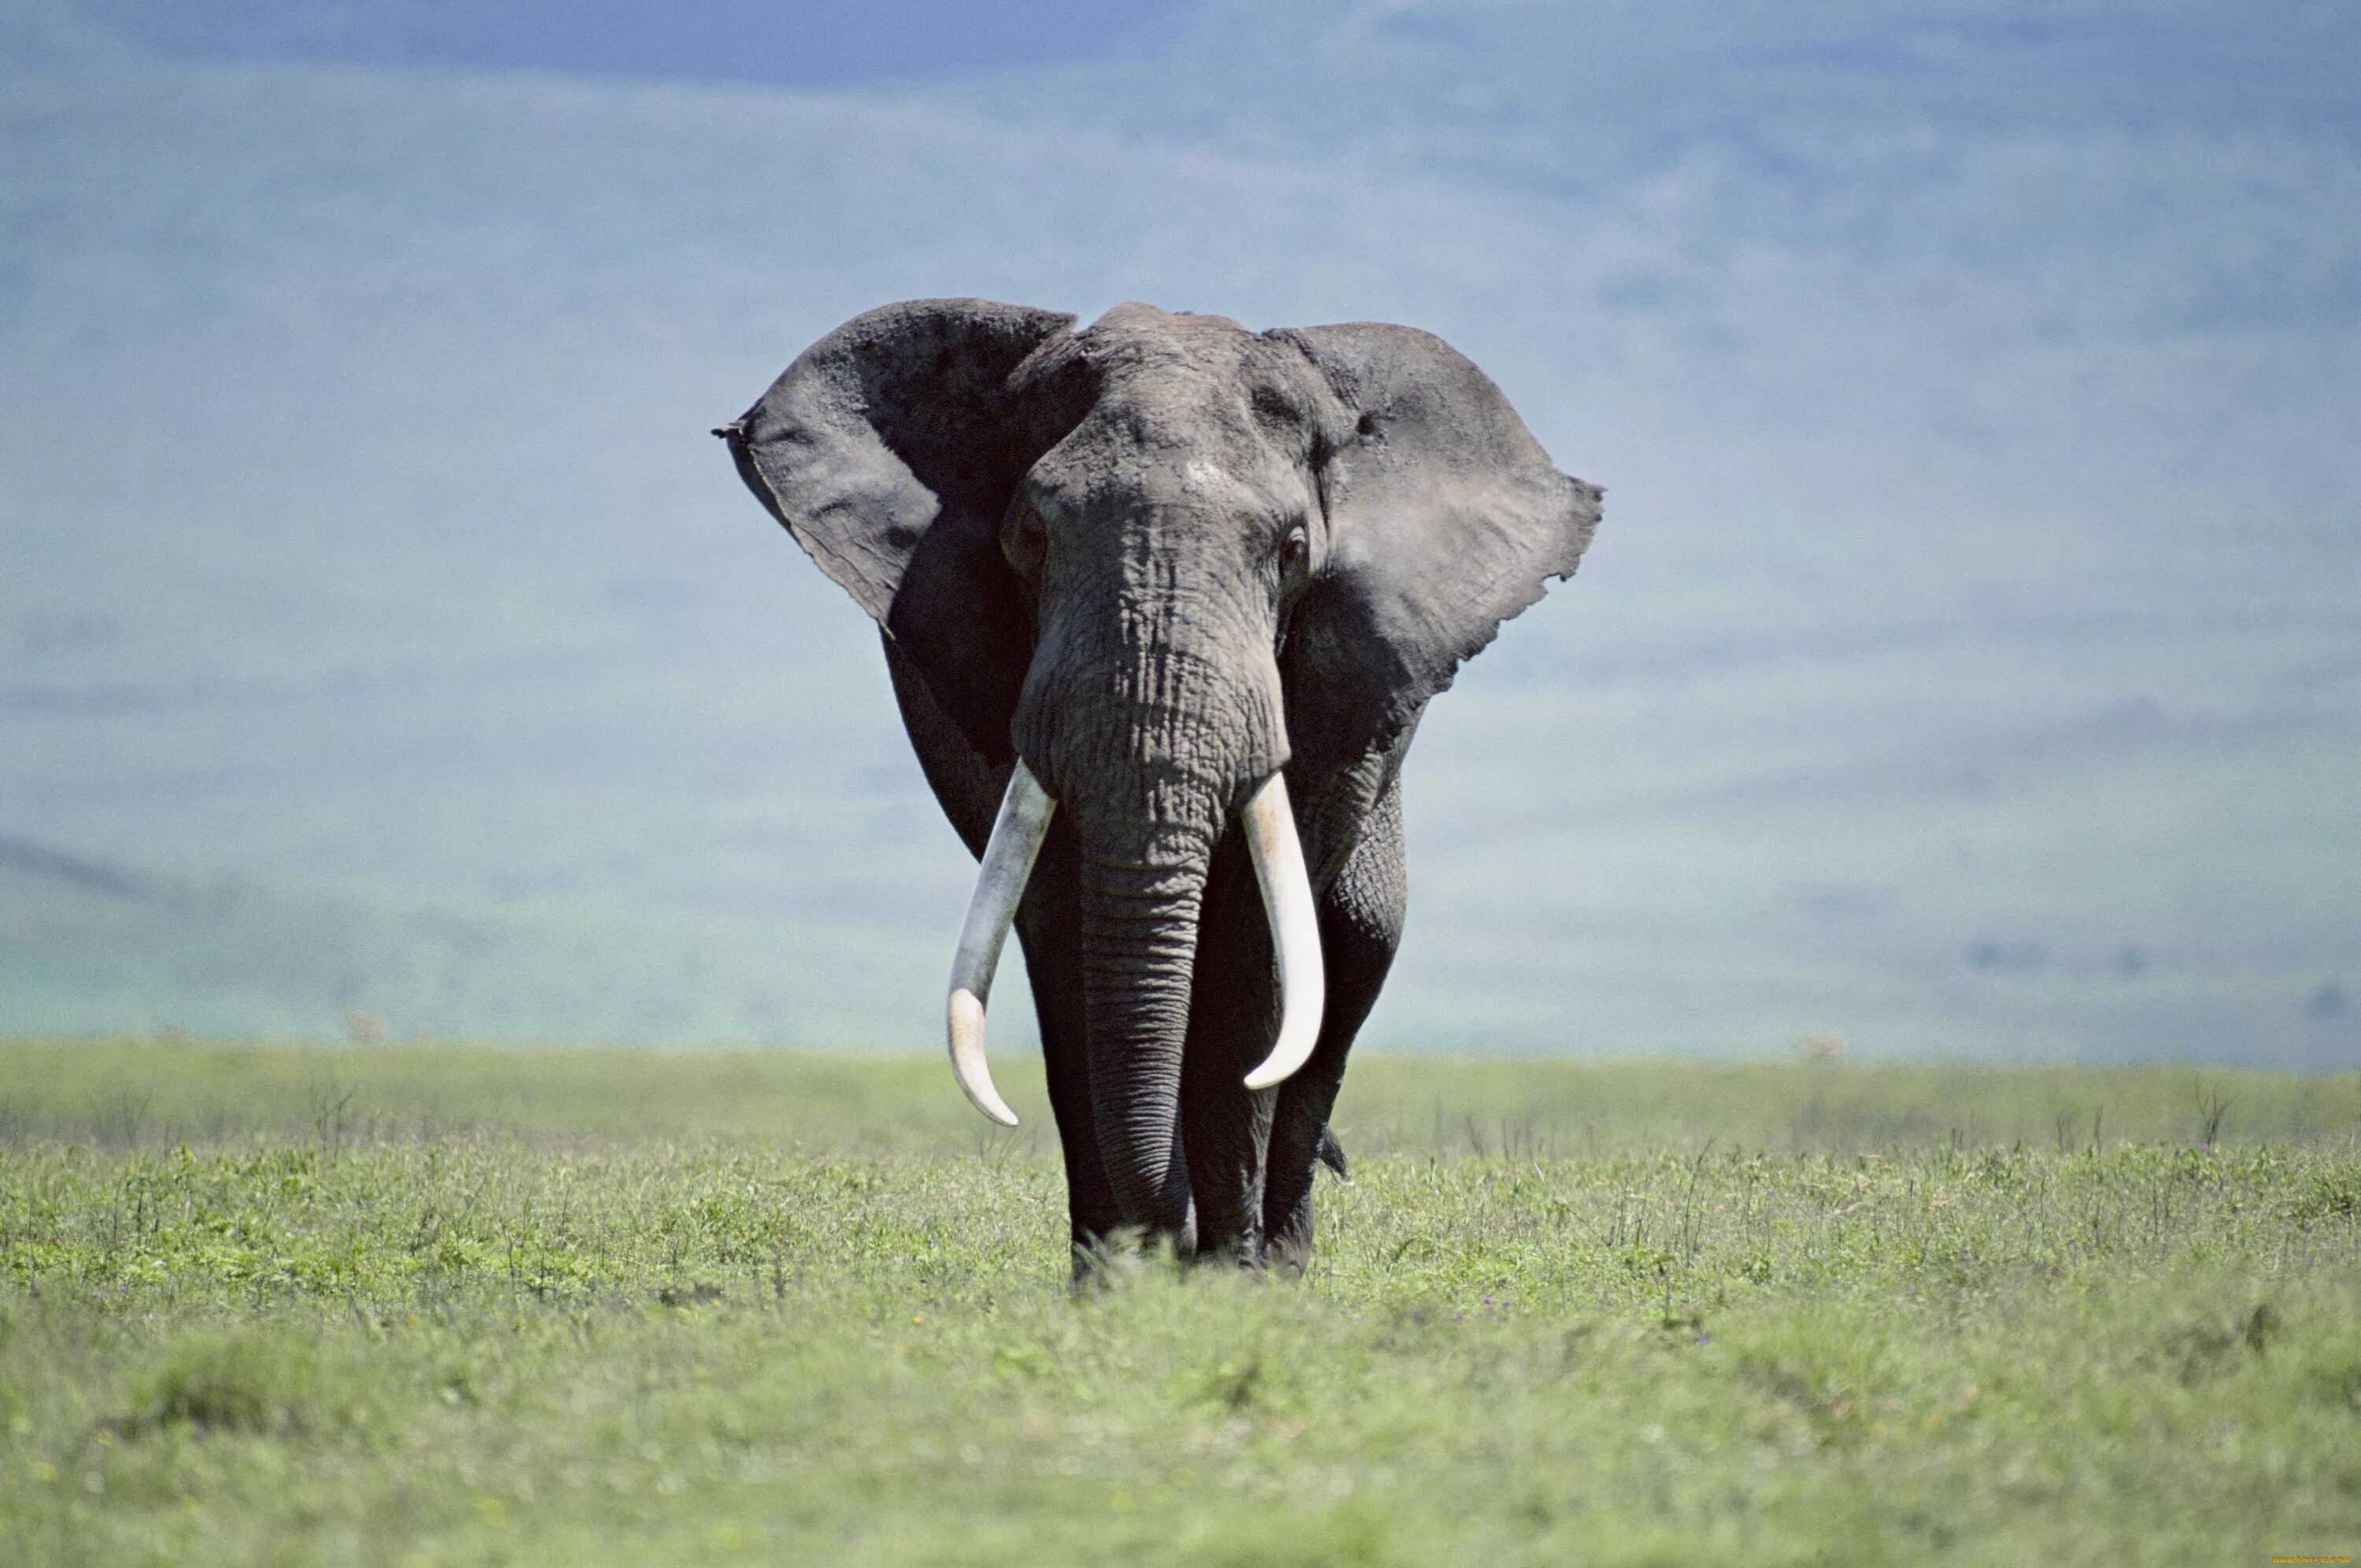 Huge elephant. Слоны в саванне. Африканский саванный слон. Красивый слон. Африканский слон в саванне.